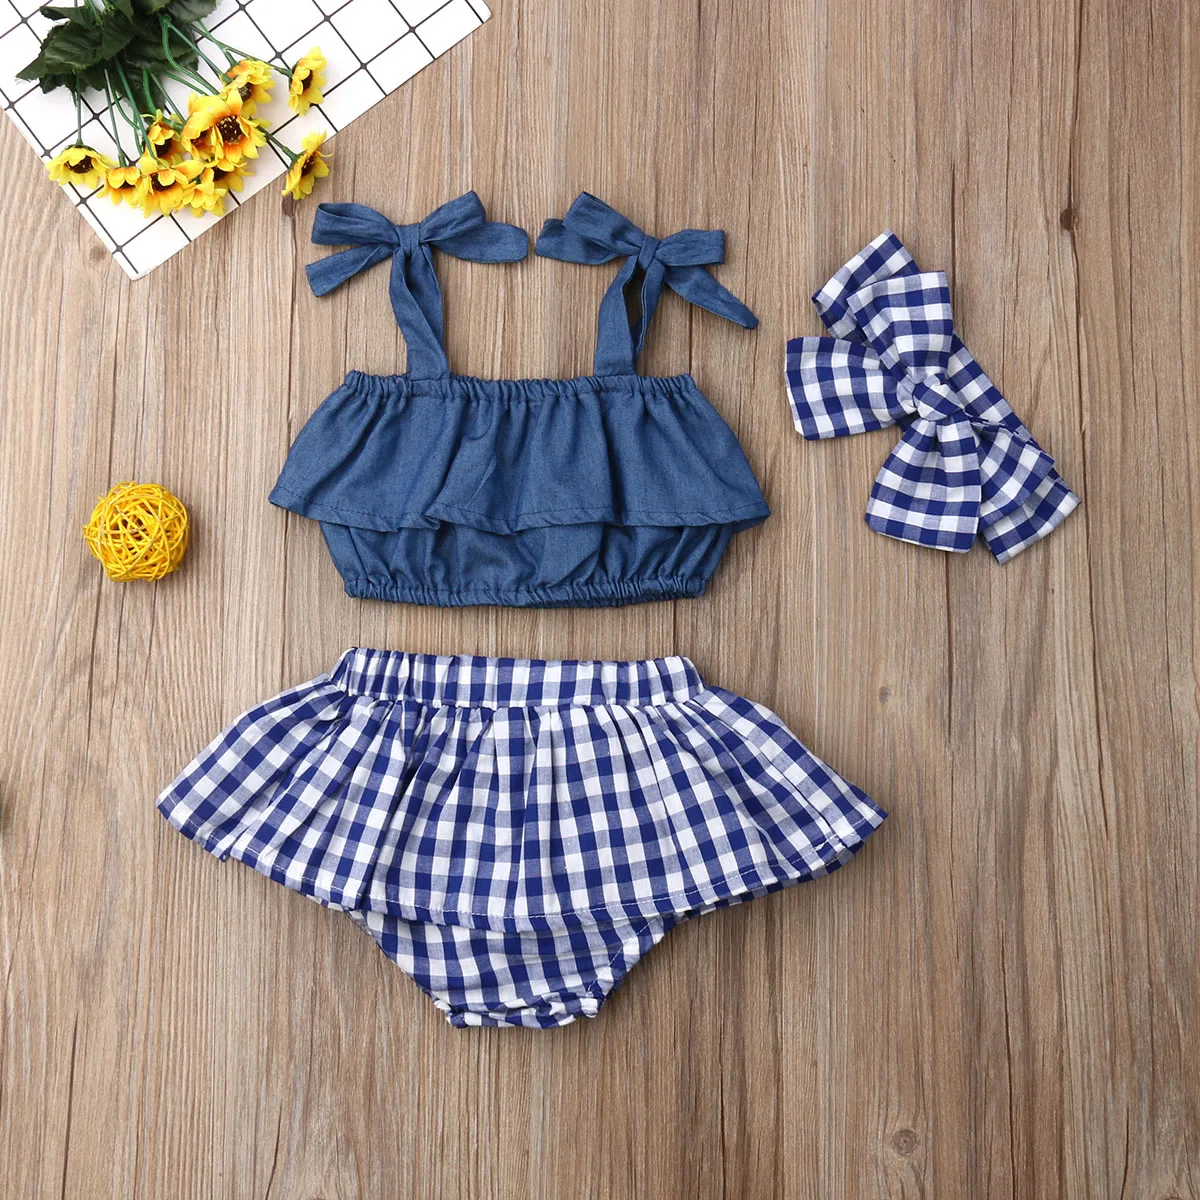 New Fashion Newborn Clothes Sets Baby Girl Sling Ruffle Crop Top Girls Plaid Mini Skirt Headband 3Pcs Outfits Clothes